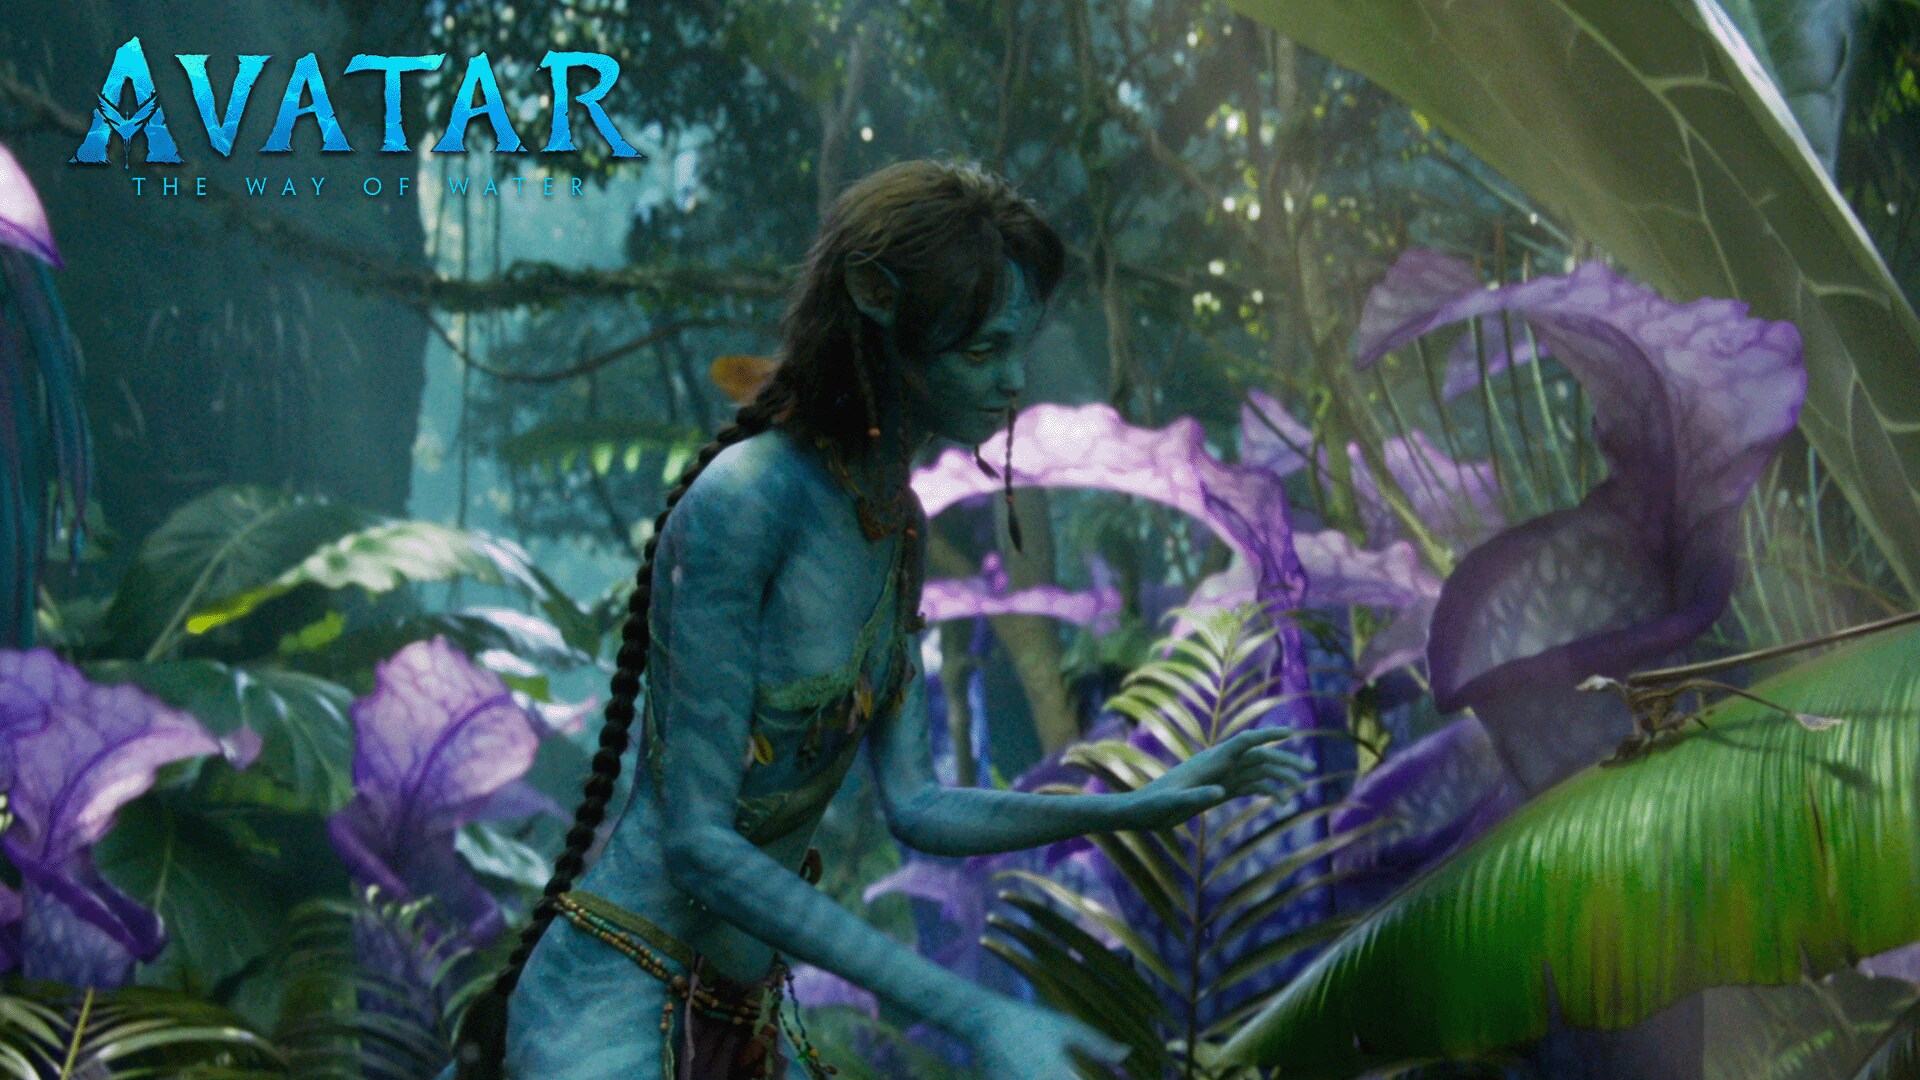 Avatar: The Way of Water | Planet Pandora